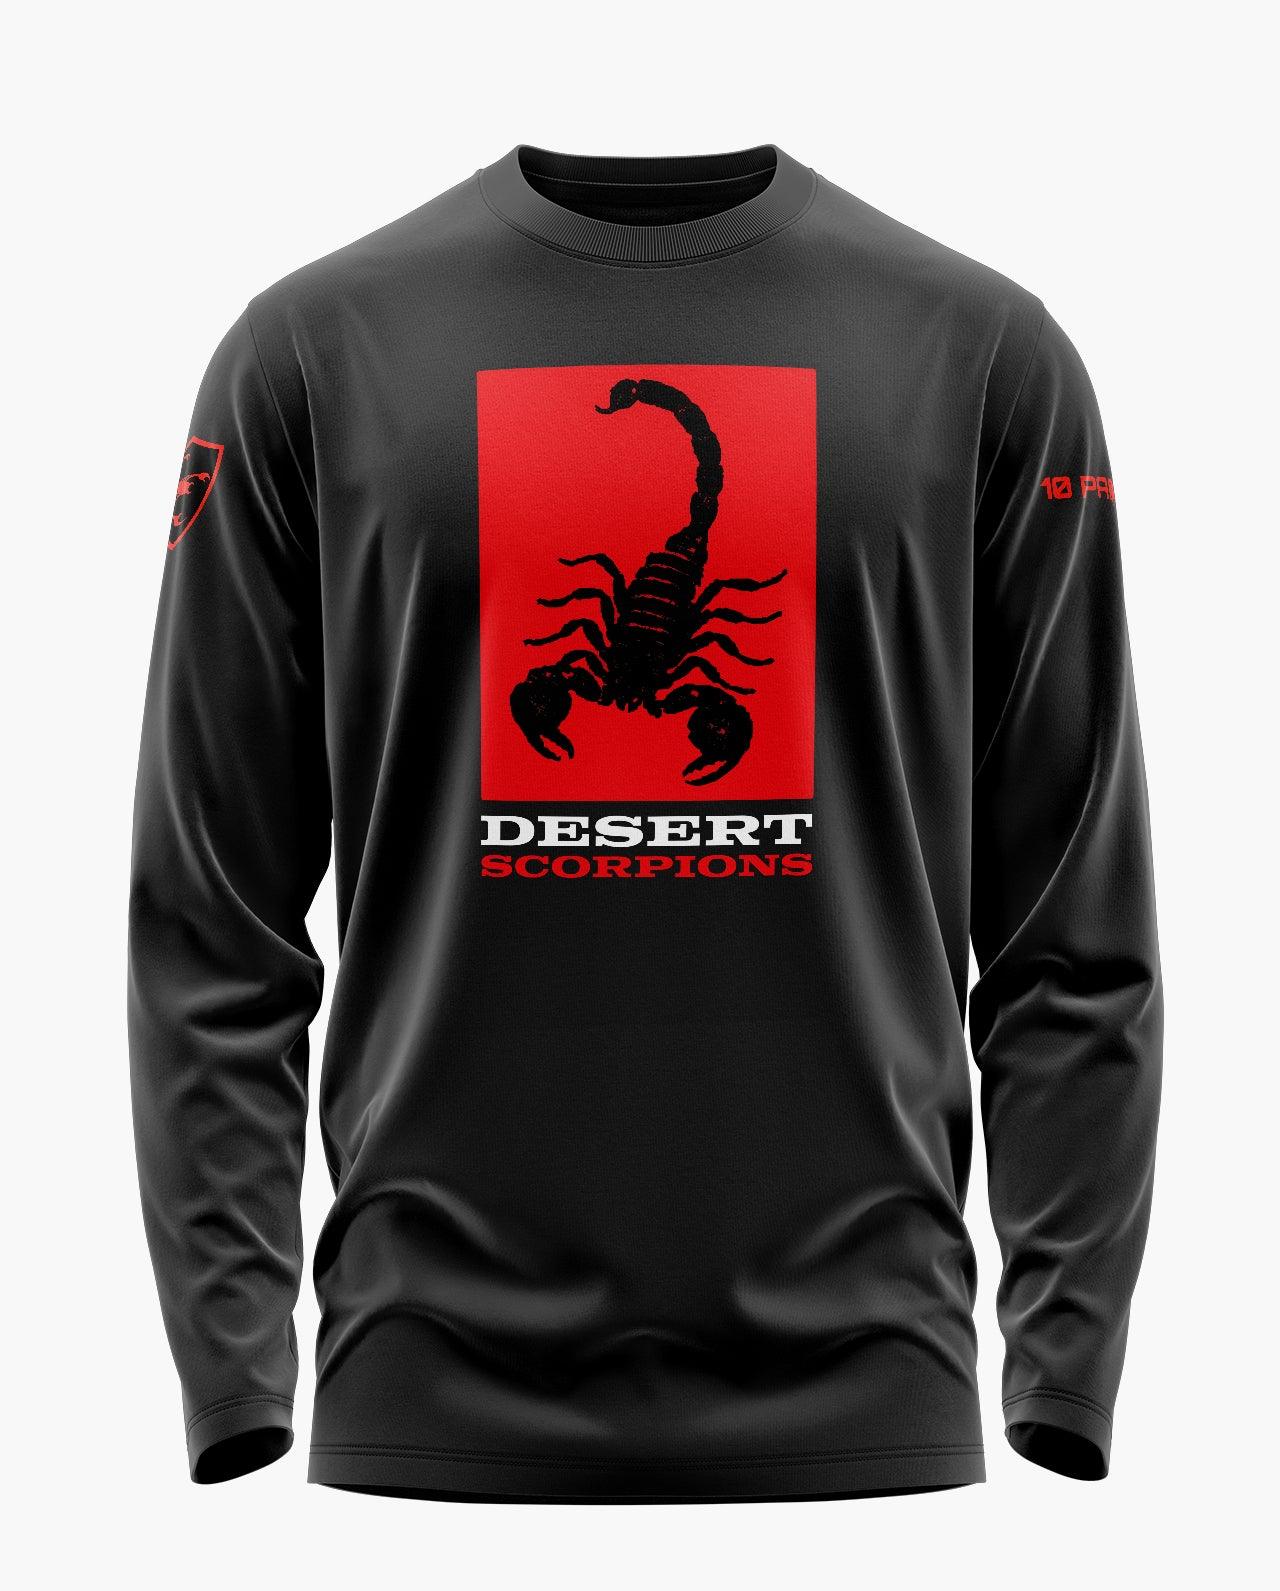 DESERT SCORPIONS-10 PARA SF Full Sleeve T-Shirt - Aero Armour